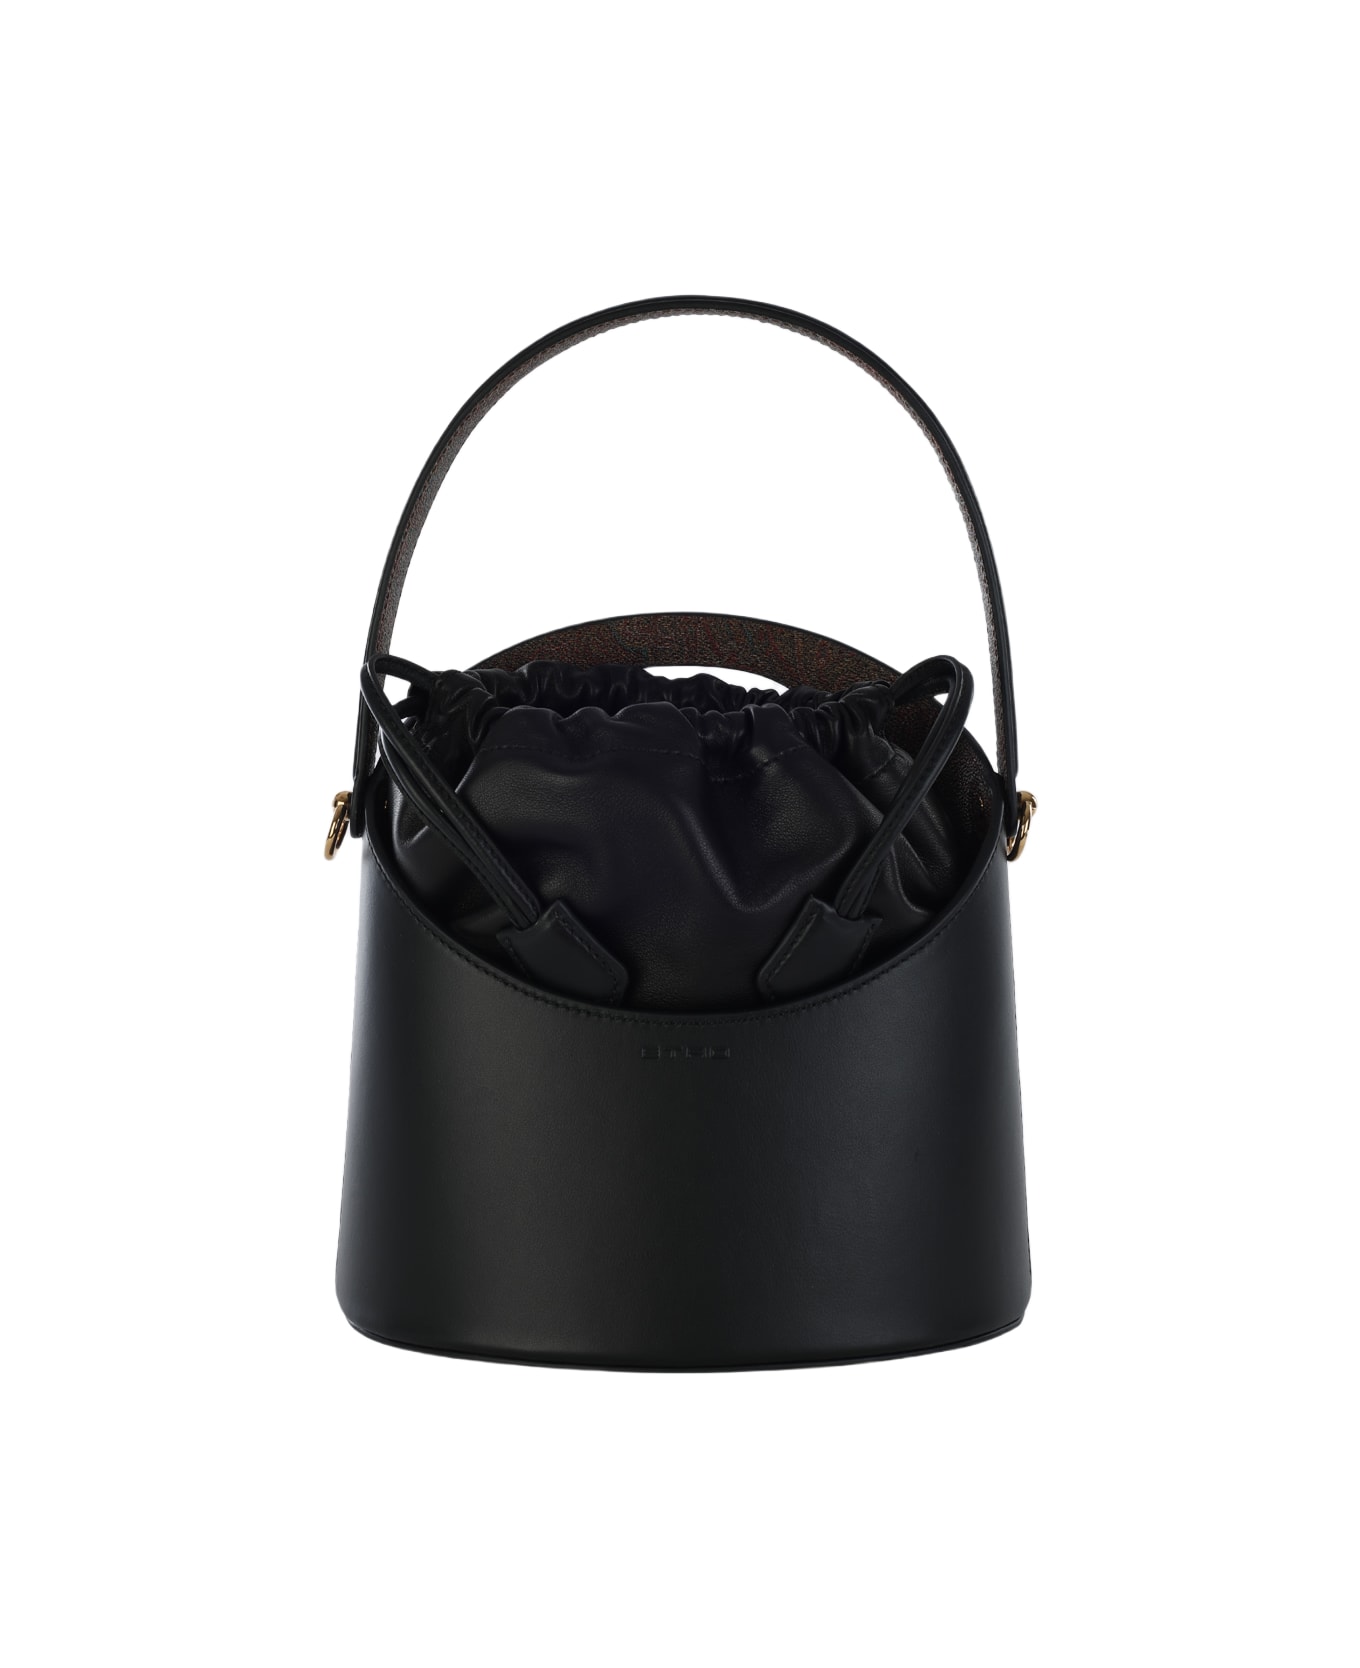 Etro Black Leather Saturno Bucket Bag - Black